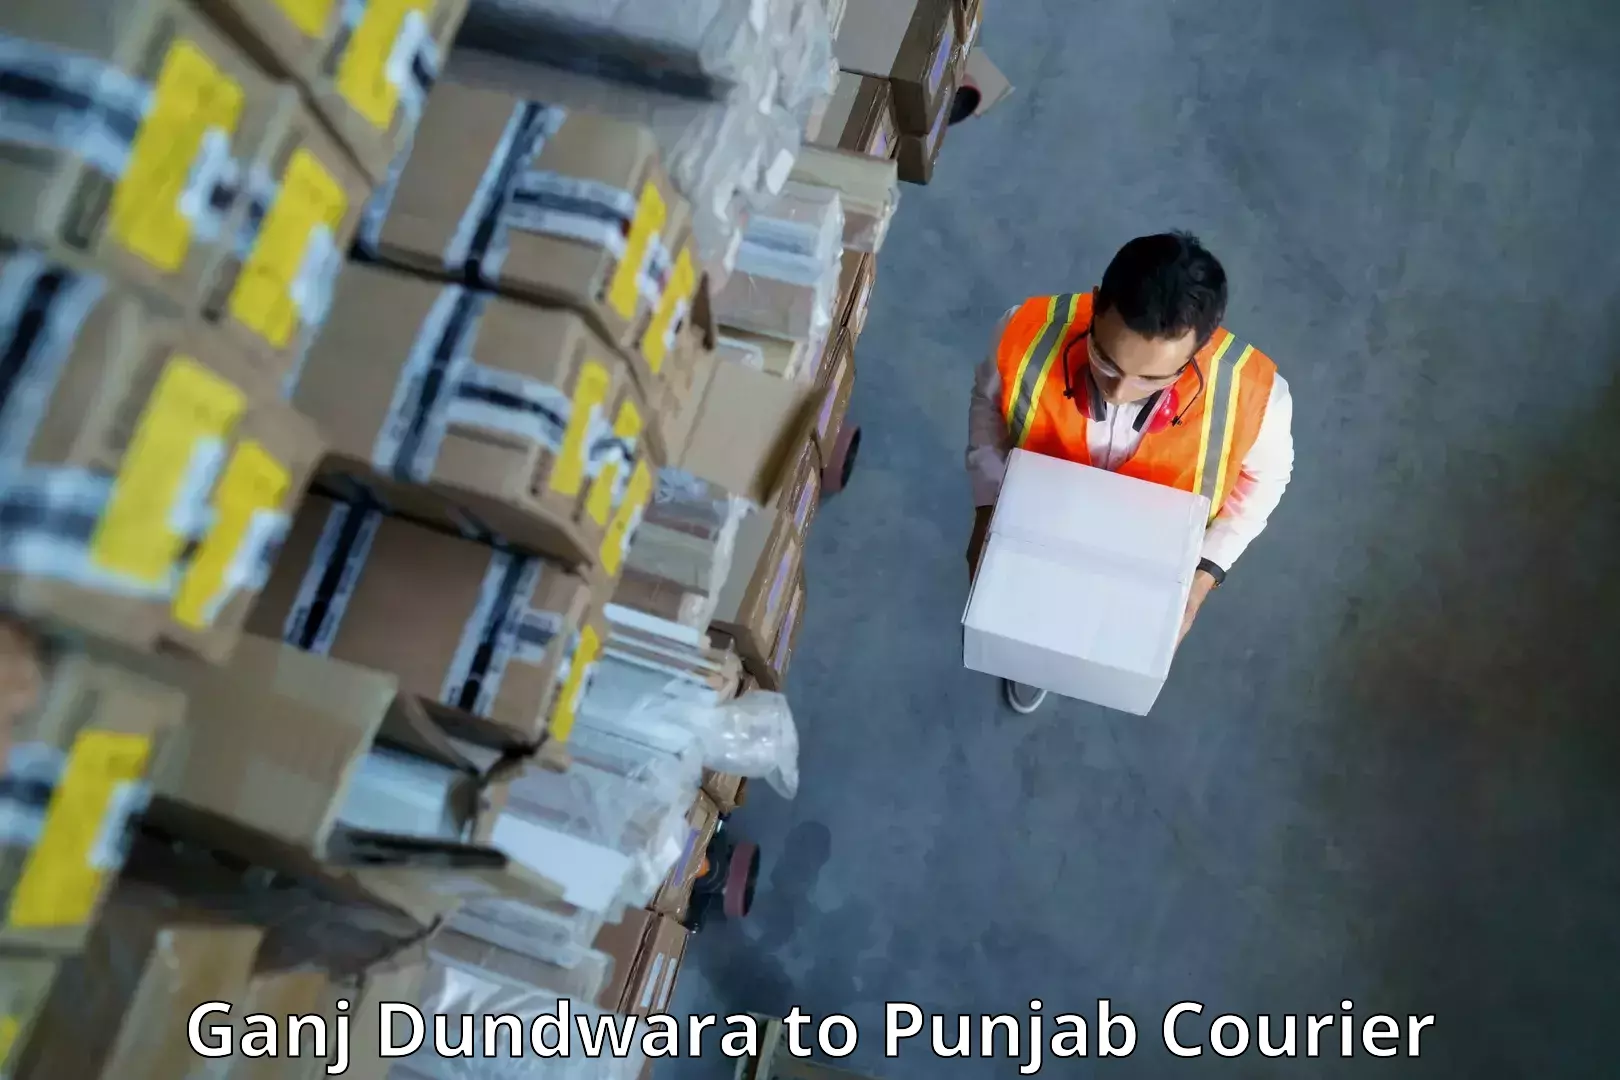 Courier service innovation Ganj Dundwara to Khanna